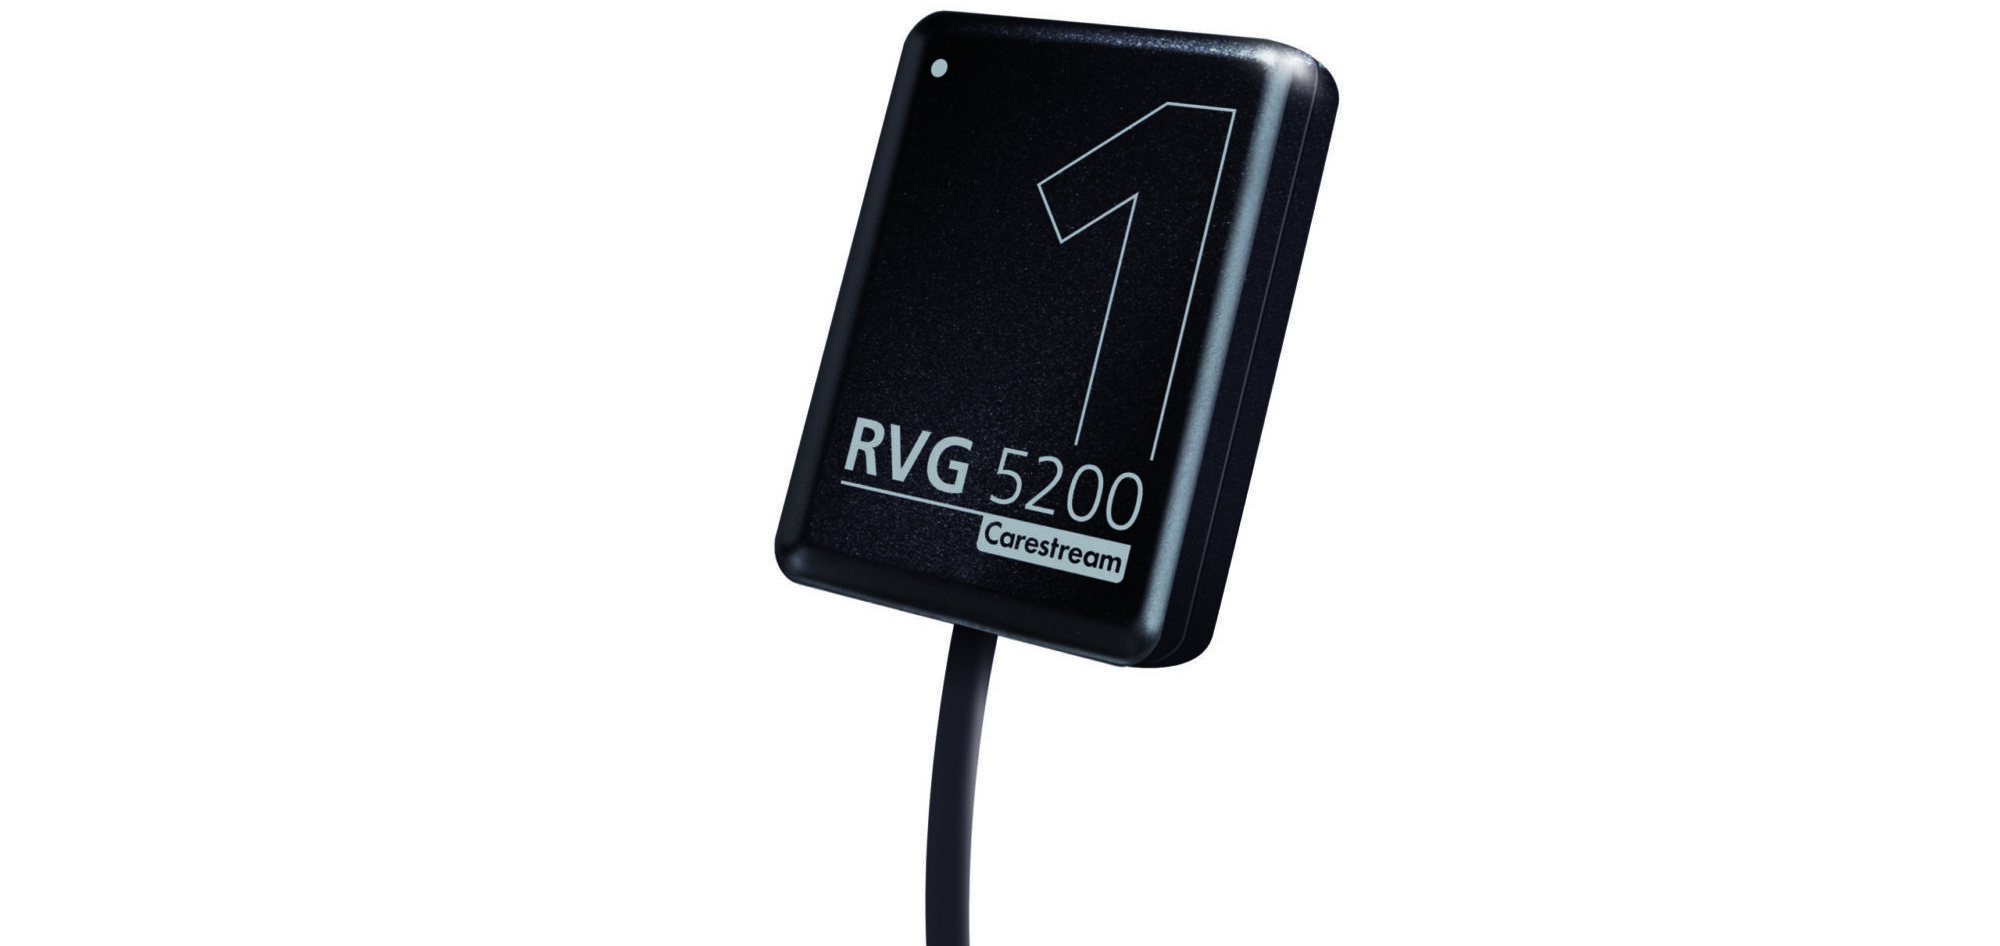 RVG 5200